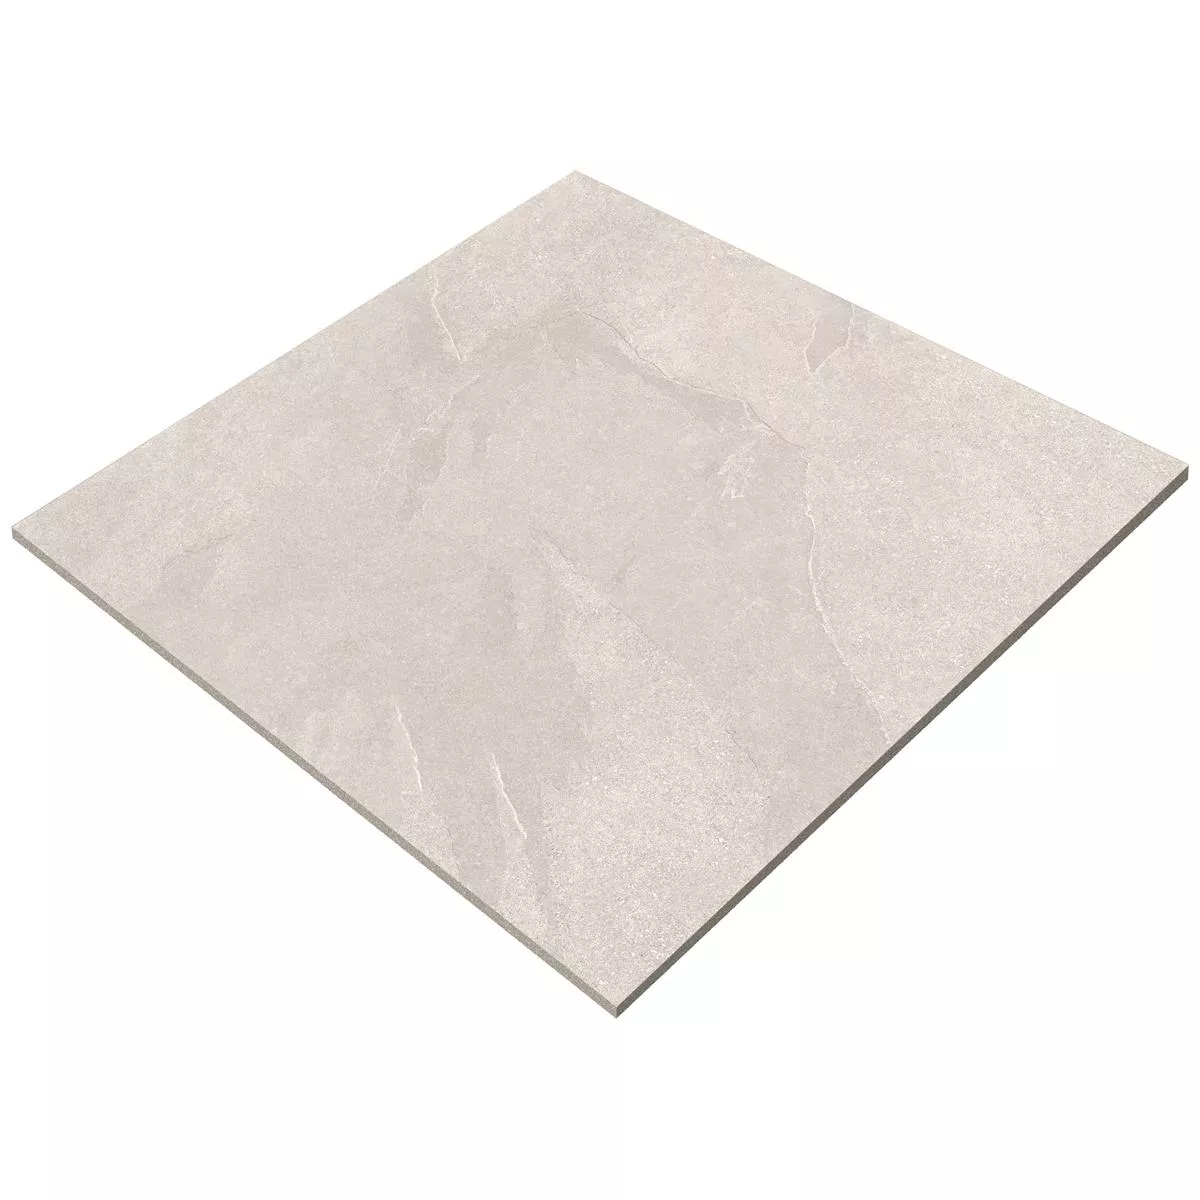 Sample Floor Tiles Memphis Stone Optic R10/B Beige 60x60cm